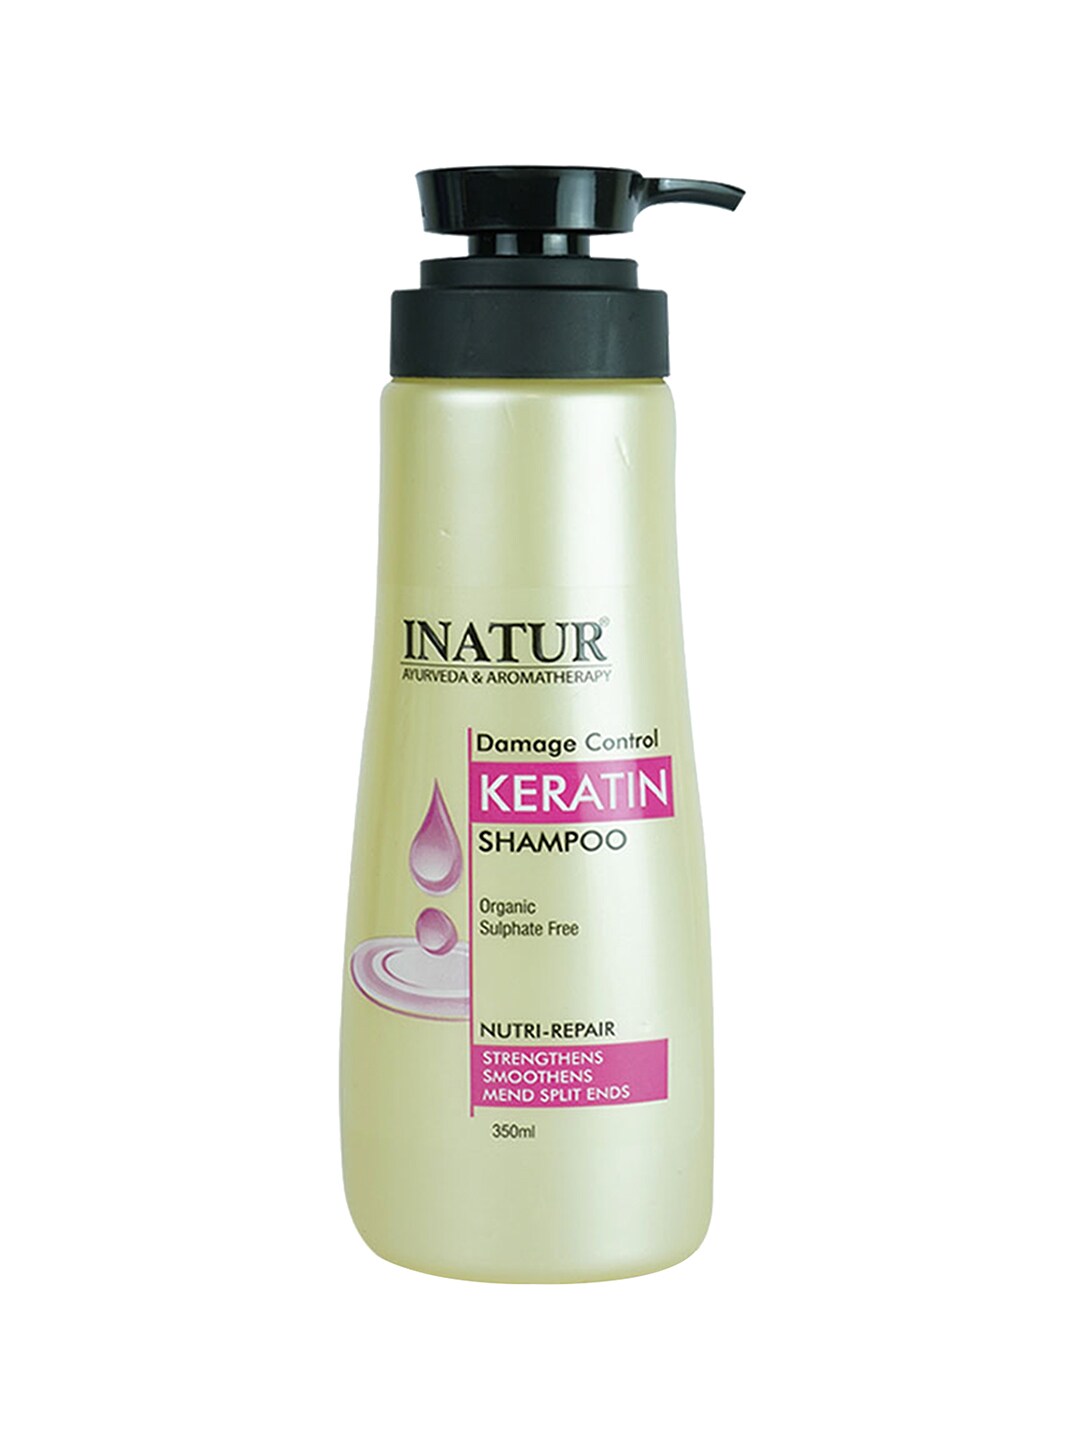 Inatur Damage Control Keratin Shampoo 350ml Price in India